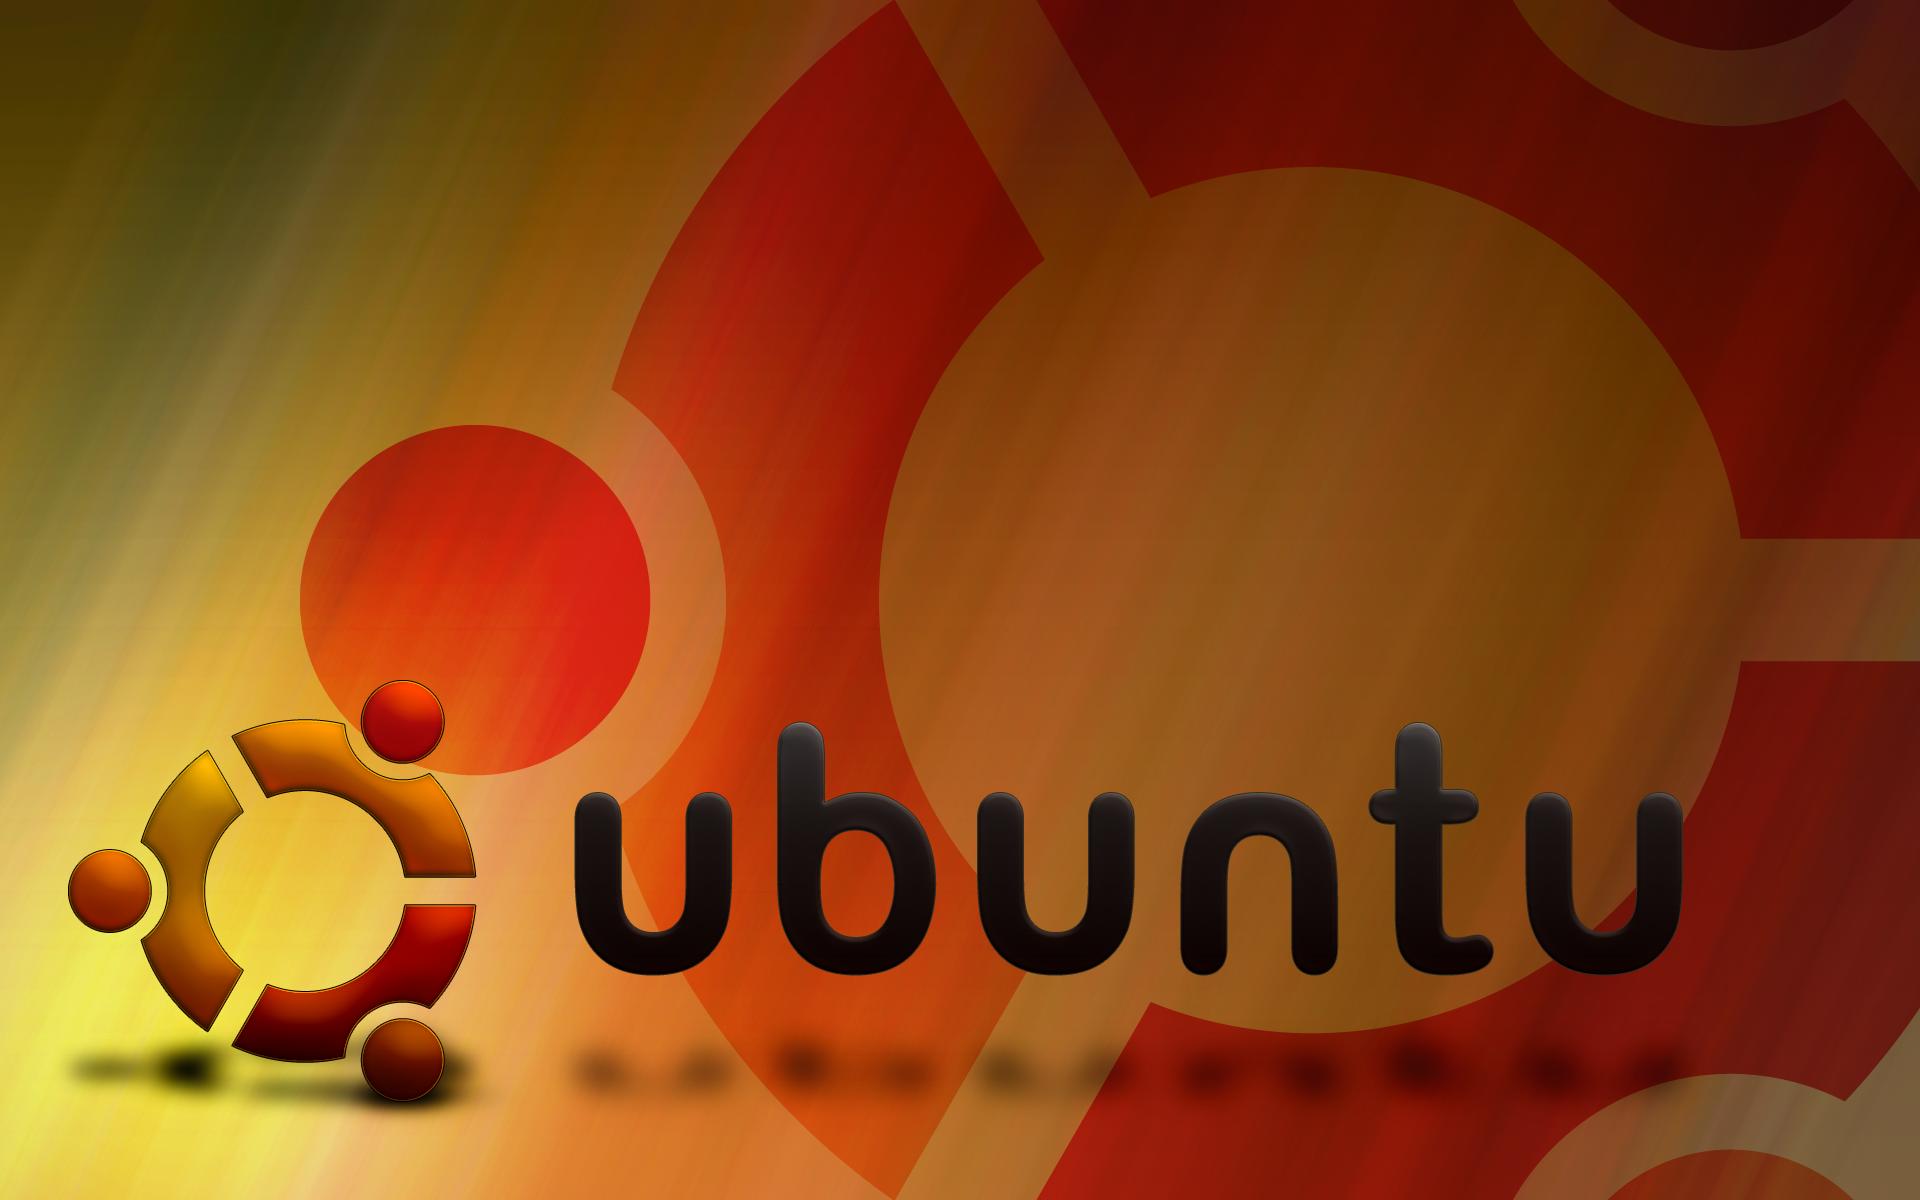 Linux wallpaper ultra widescreen wallpaper ubuntu